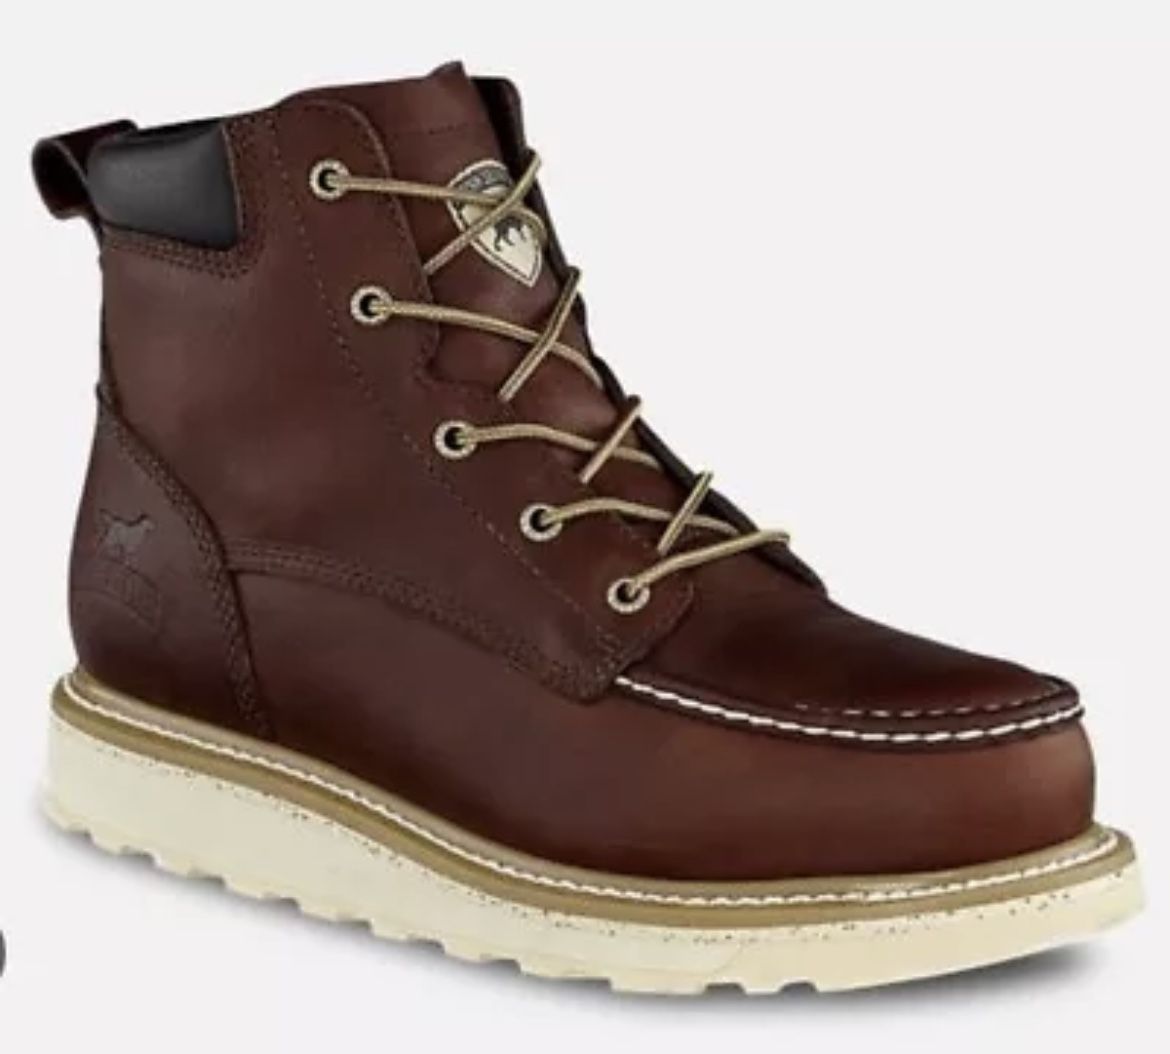 Irish Setter - 83605, 6" Ashby Soft Toe, Full Grain Leather Work Boots Size 14 D